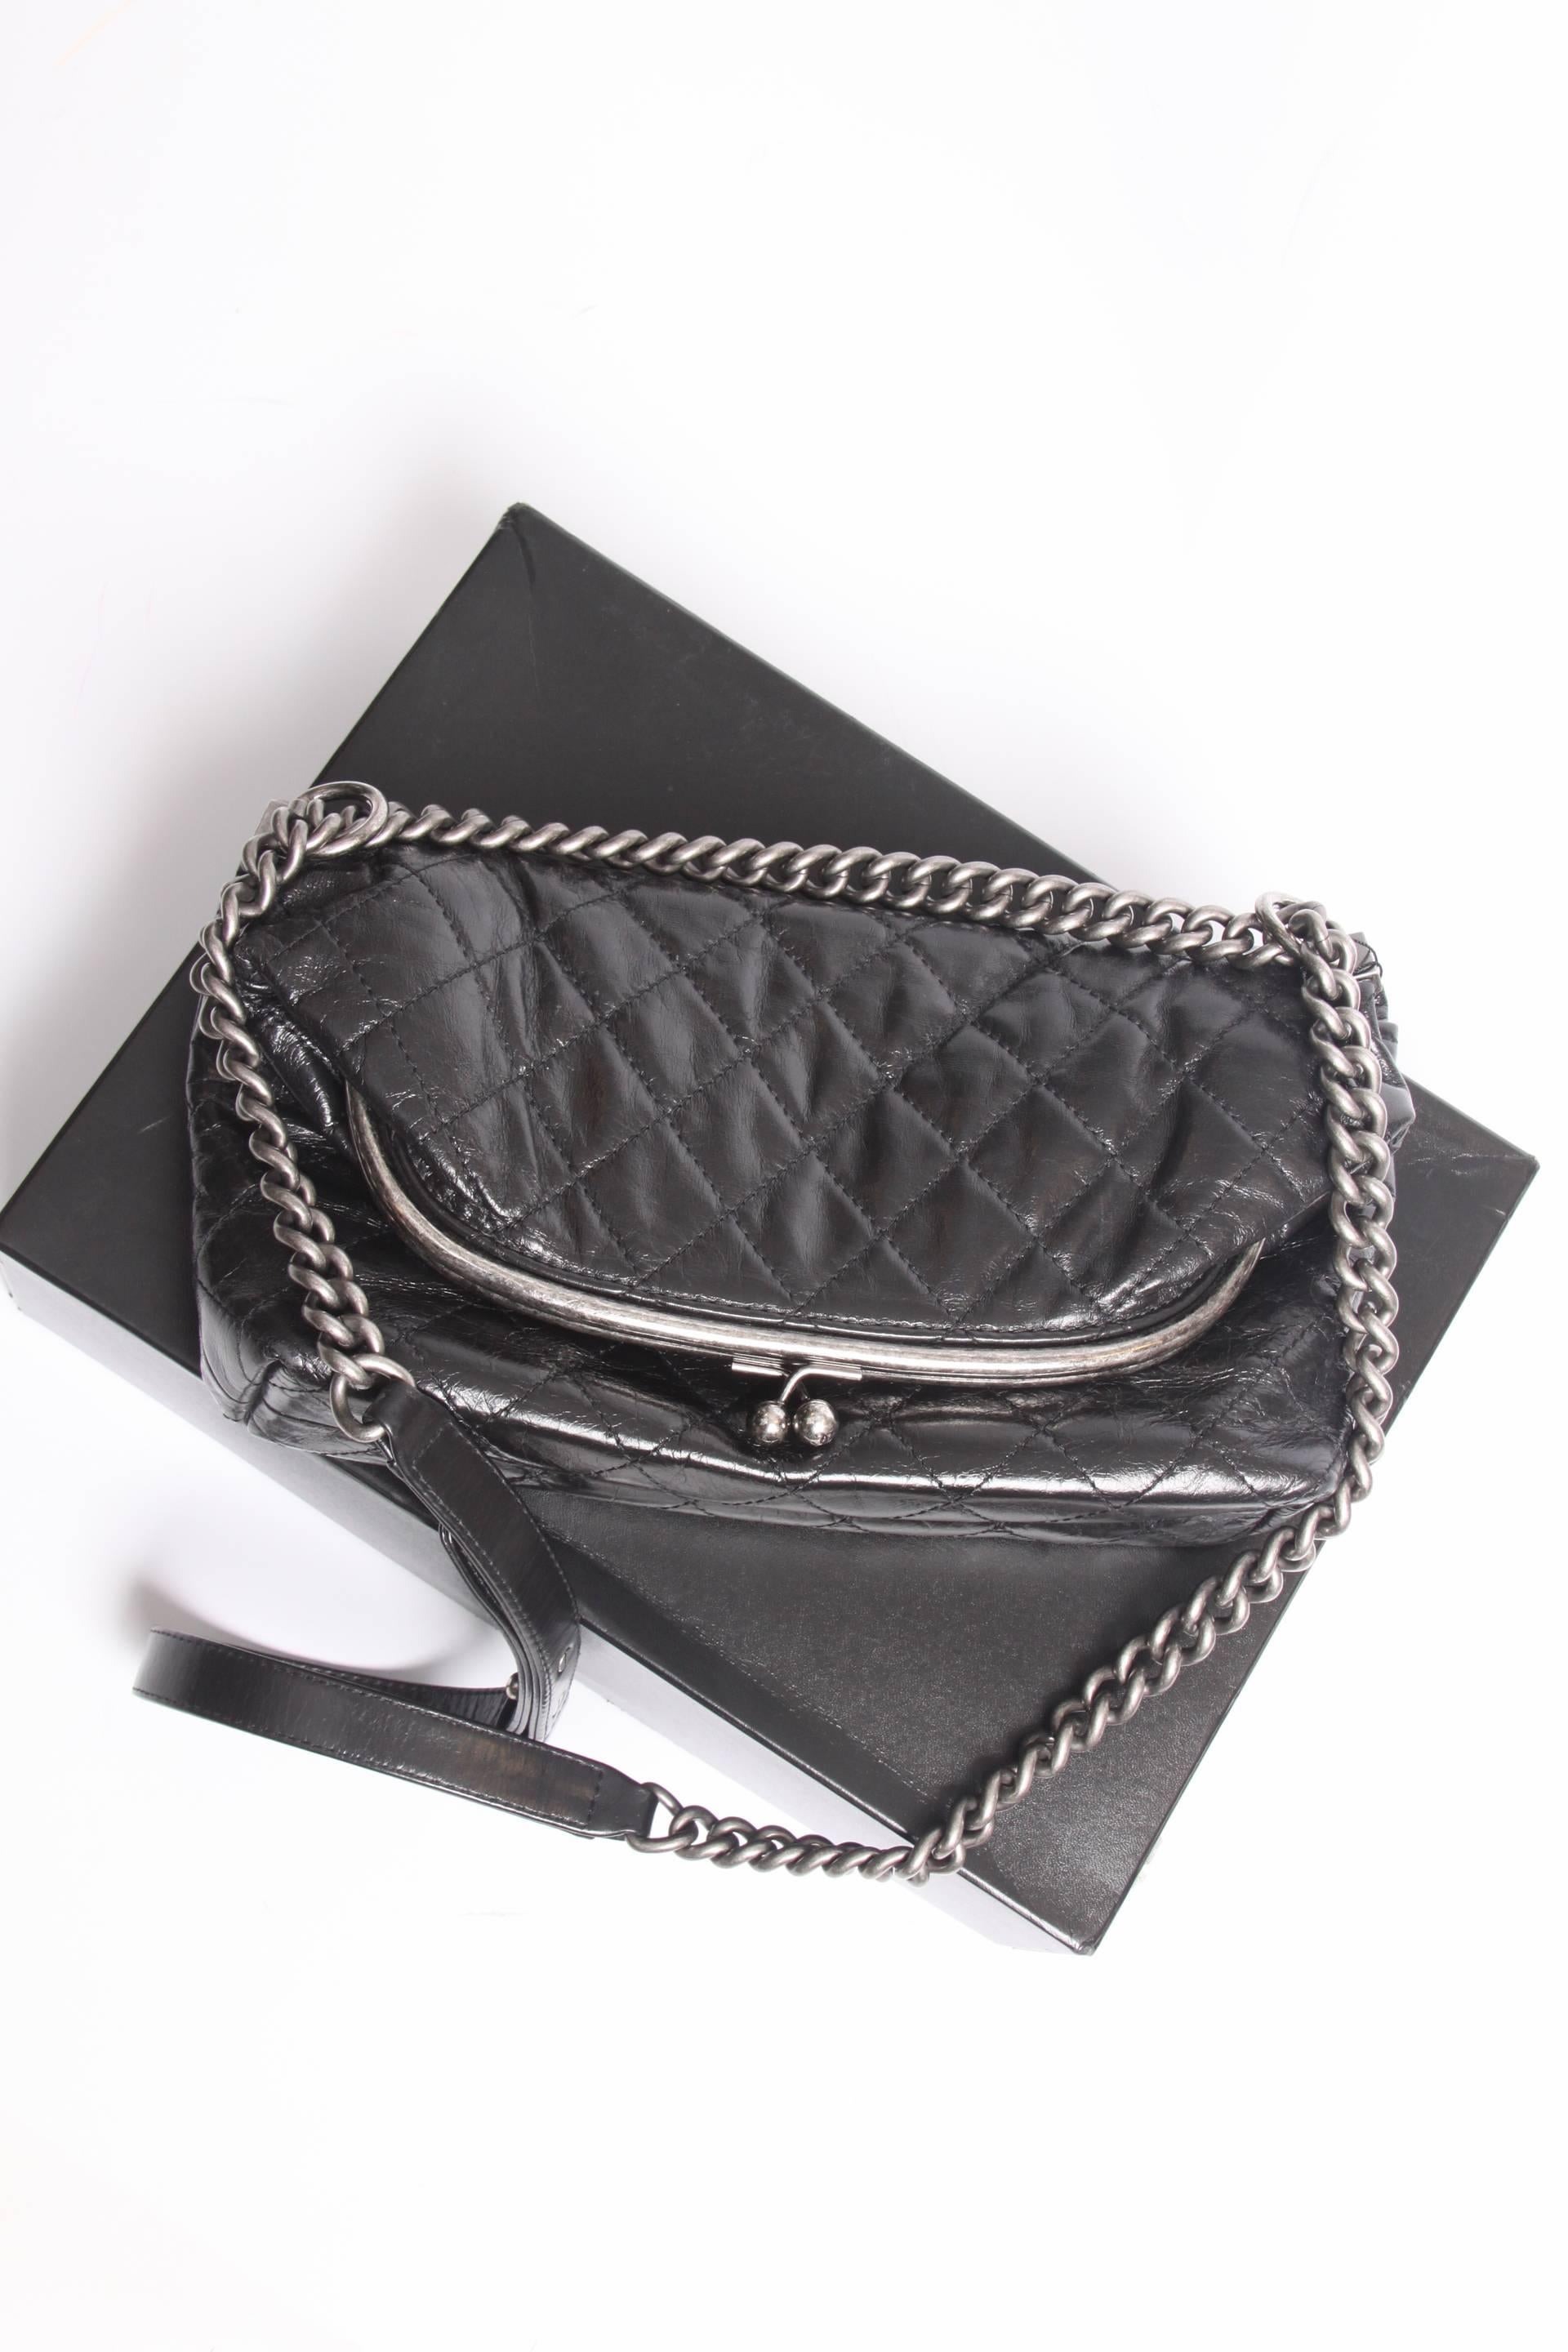 Chanel Tabatière Kiss Lock Bag - black leather - crossbody 2016 3